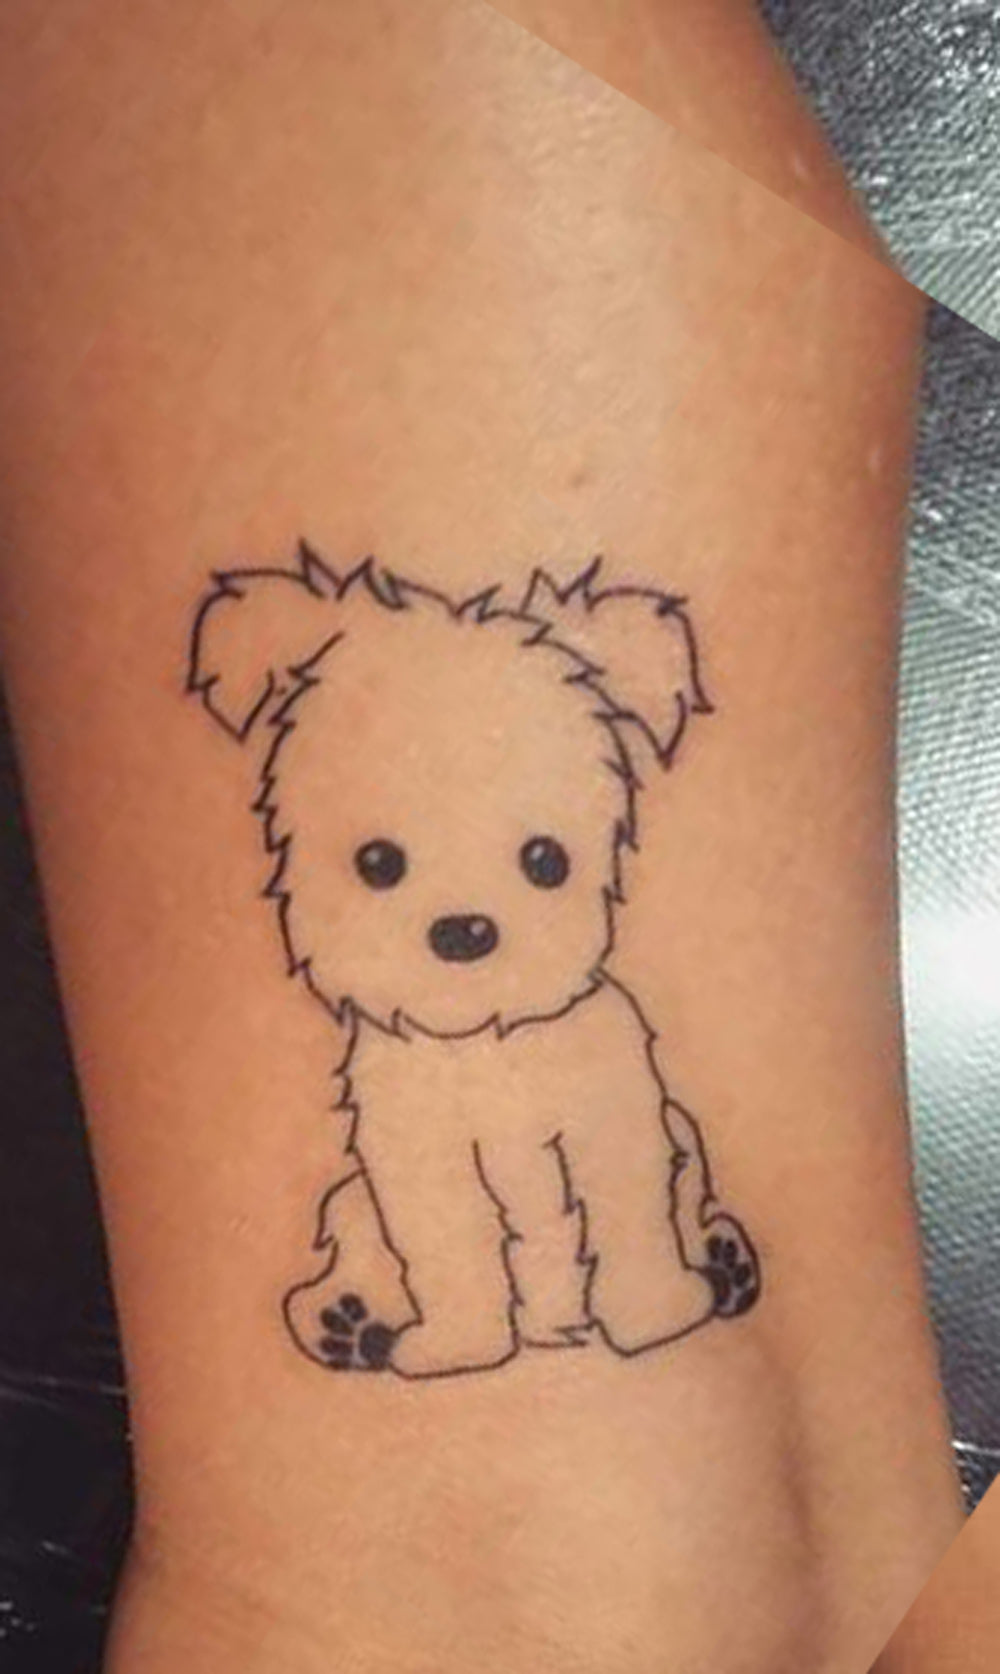 Cute Small Dog Tattoo Ideas Arm Sleeve for Women -  Ideas lindas del tatuaje del perro para las mujeres - www.MyBodiArt.com